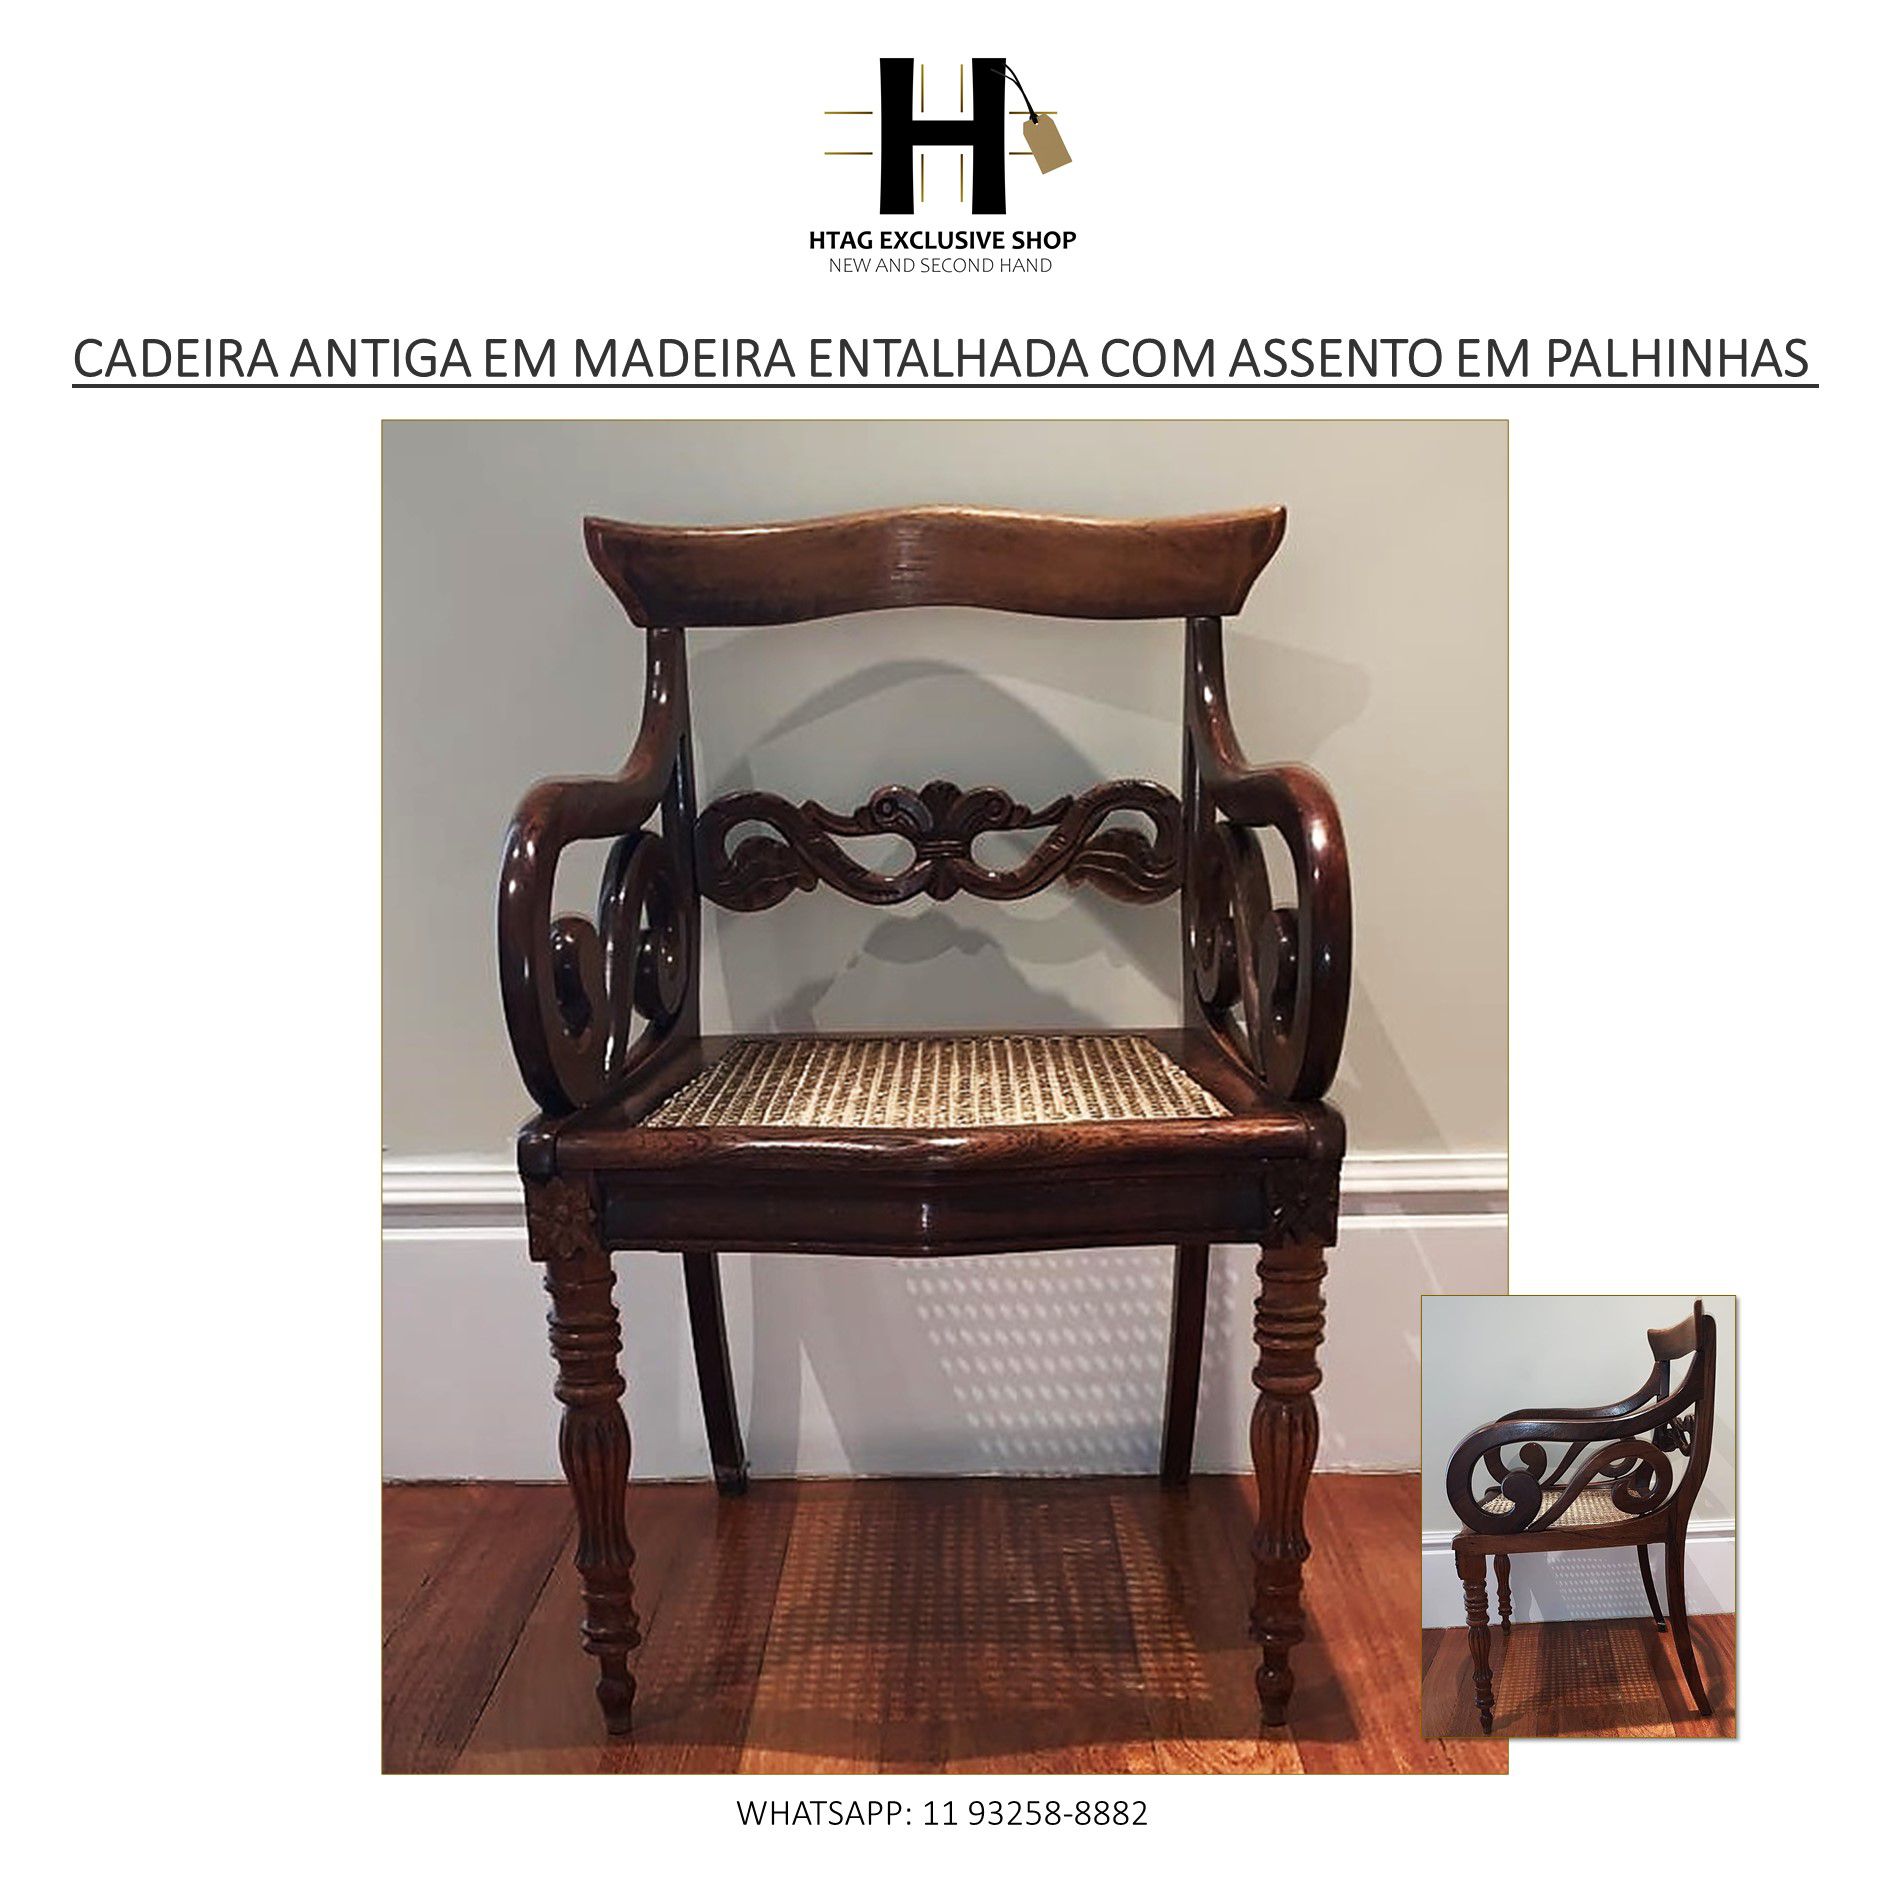 Cadeira, cadeira antiga, cadeira de madeira, Decoração, cadeira design -  HTAG EXCLUSIVE SHOP - New & Second Hand